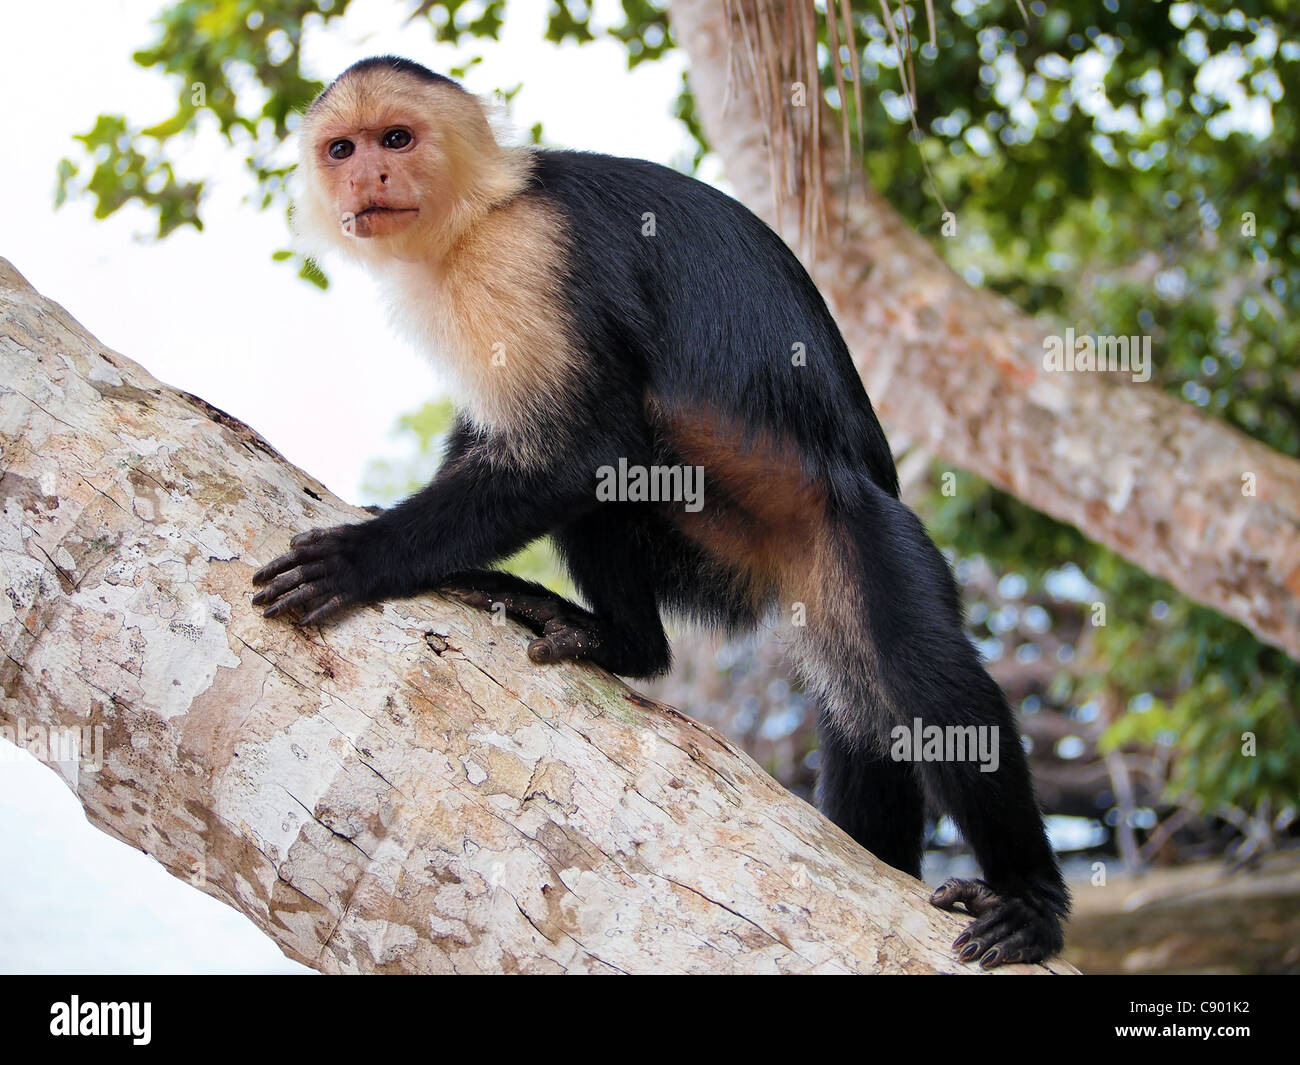 White-faced capuchin monkey on coconut tree, national park of Cahuita, Caribbean, Costa Rica Stock Photo